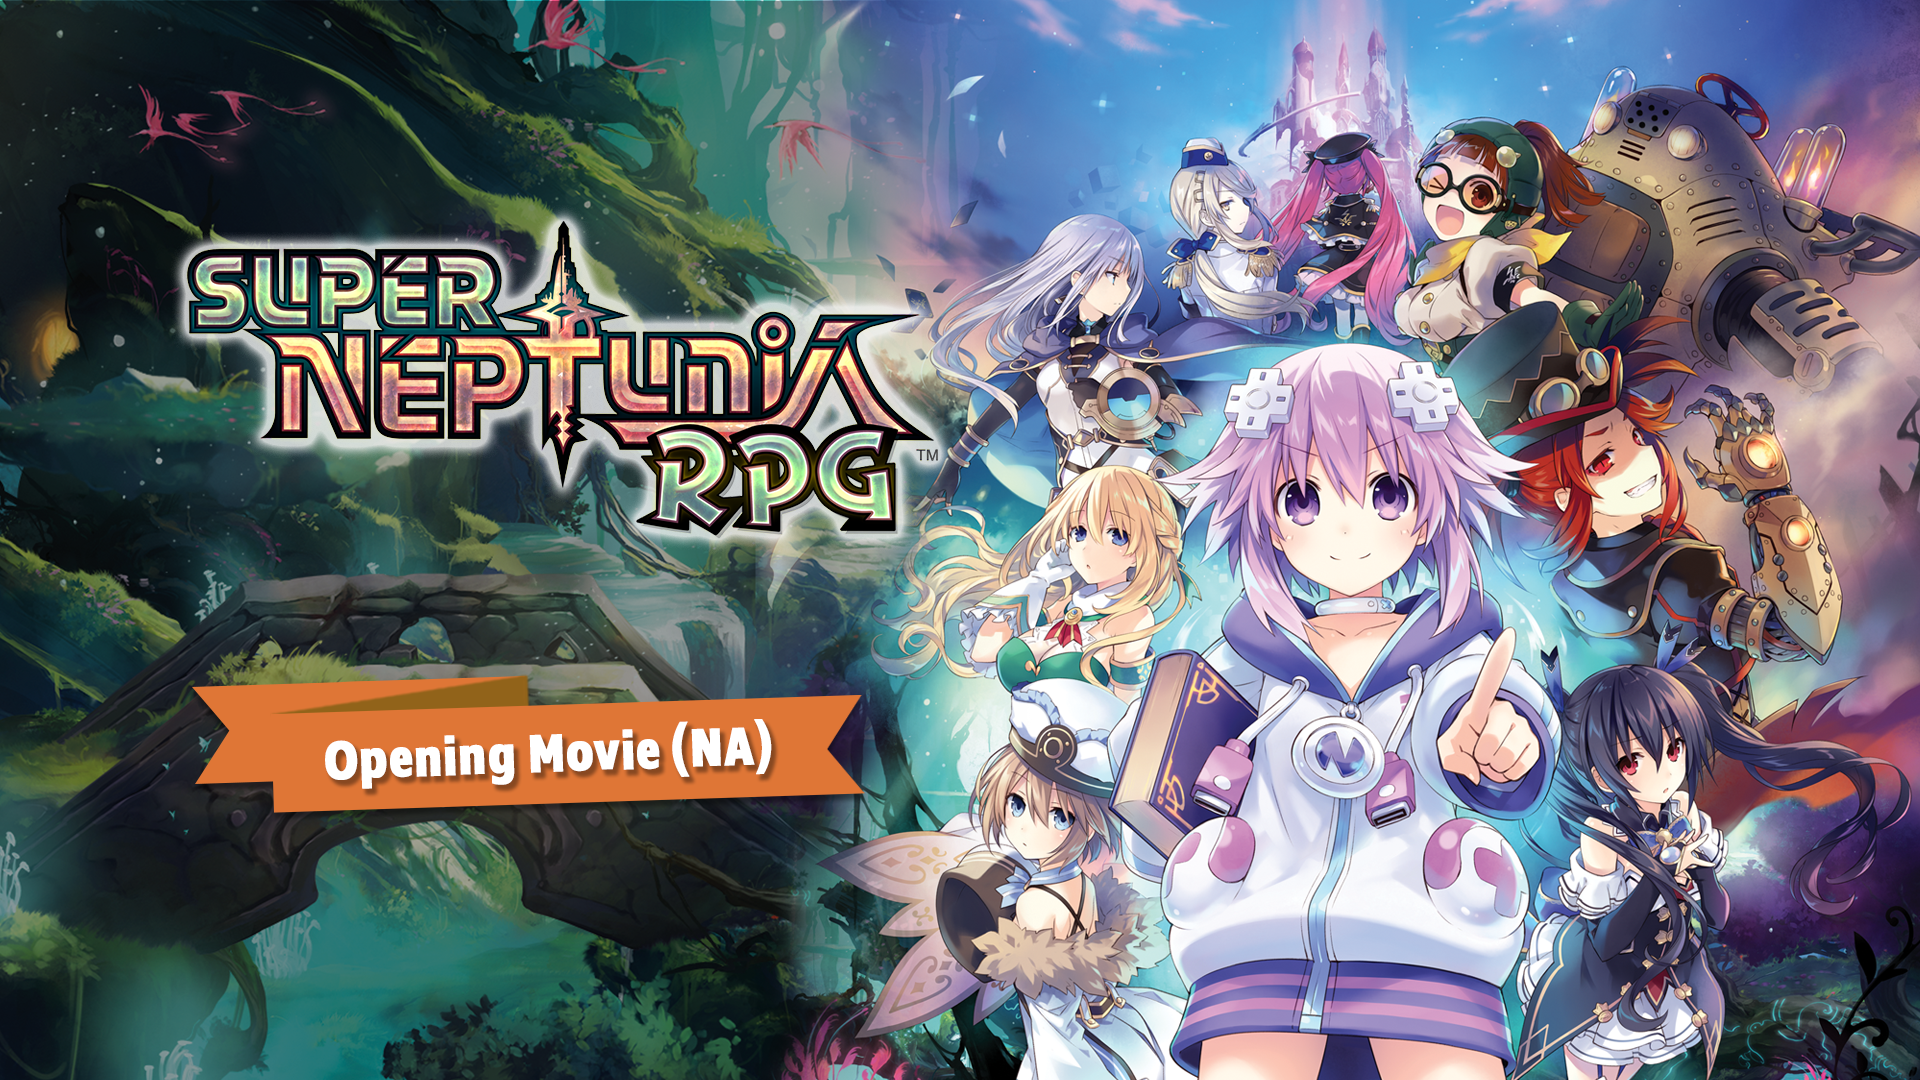 Super Neptunia RPG delayed until Spring 2019 in North America